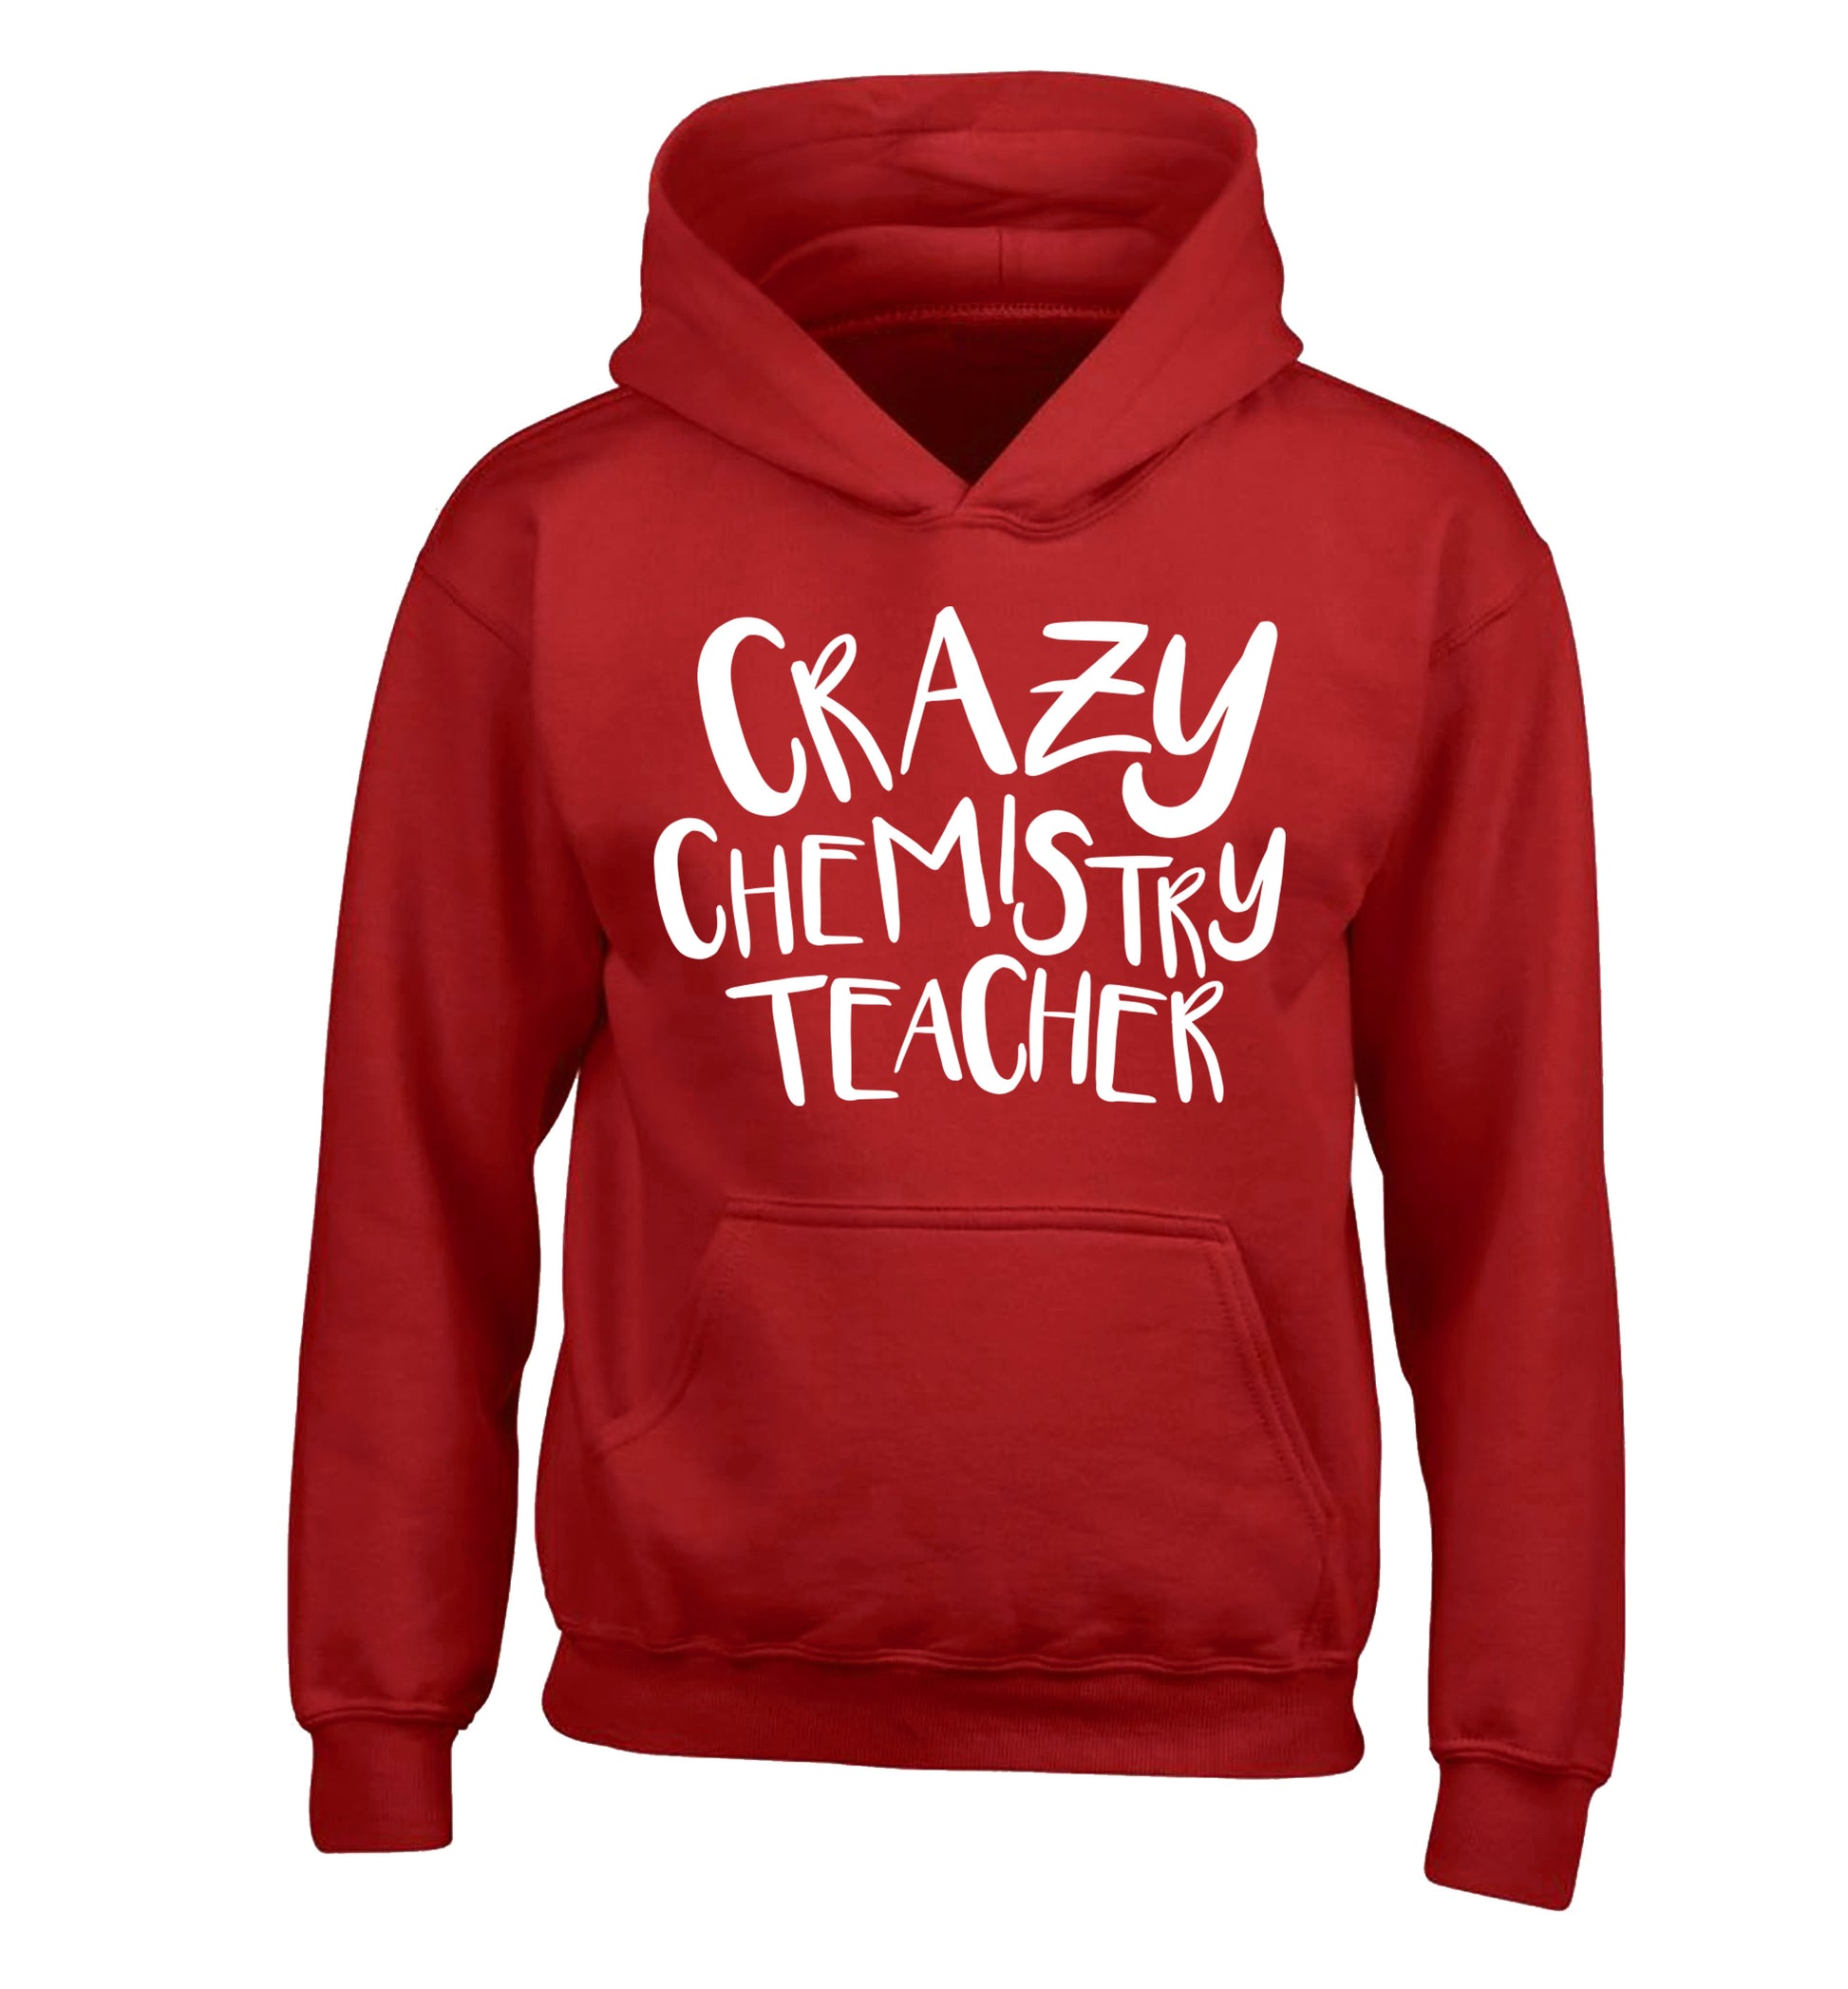 Crazy chemistry teacher children's red hoodie 12-13 Years